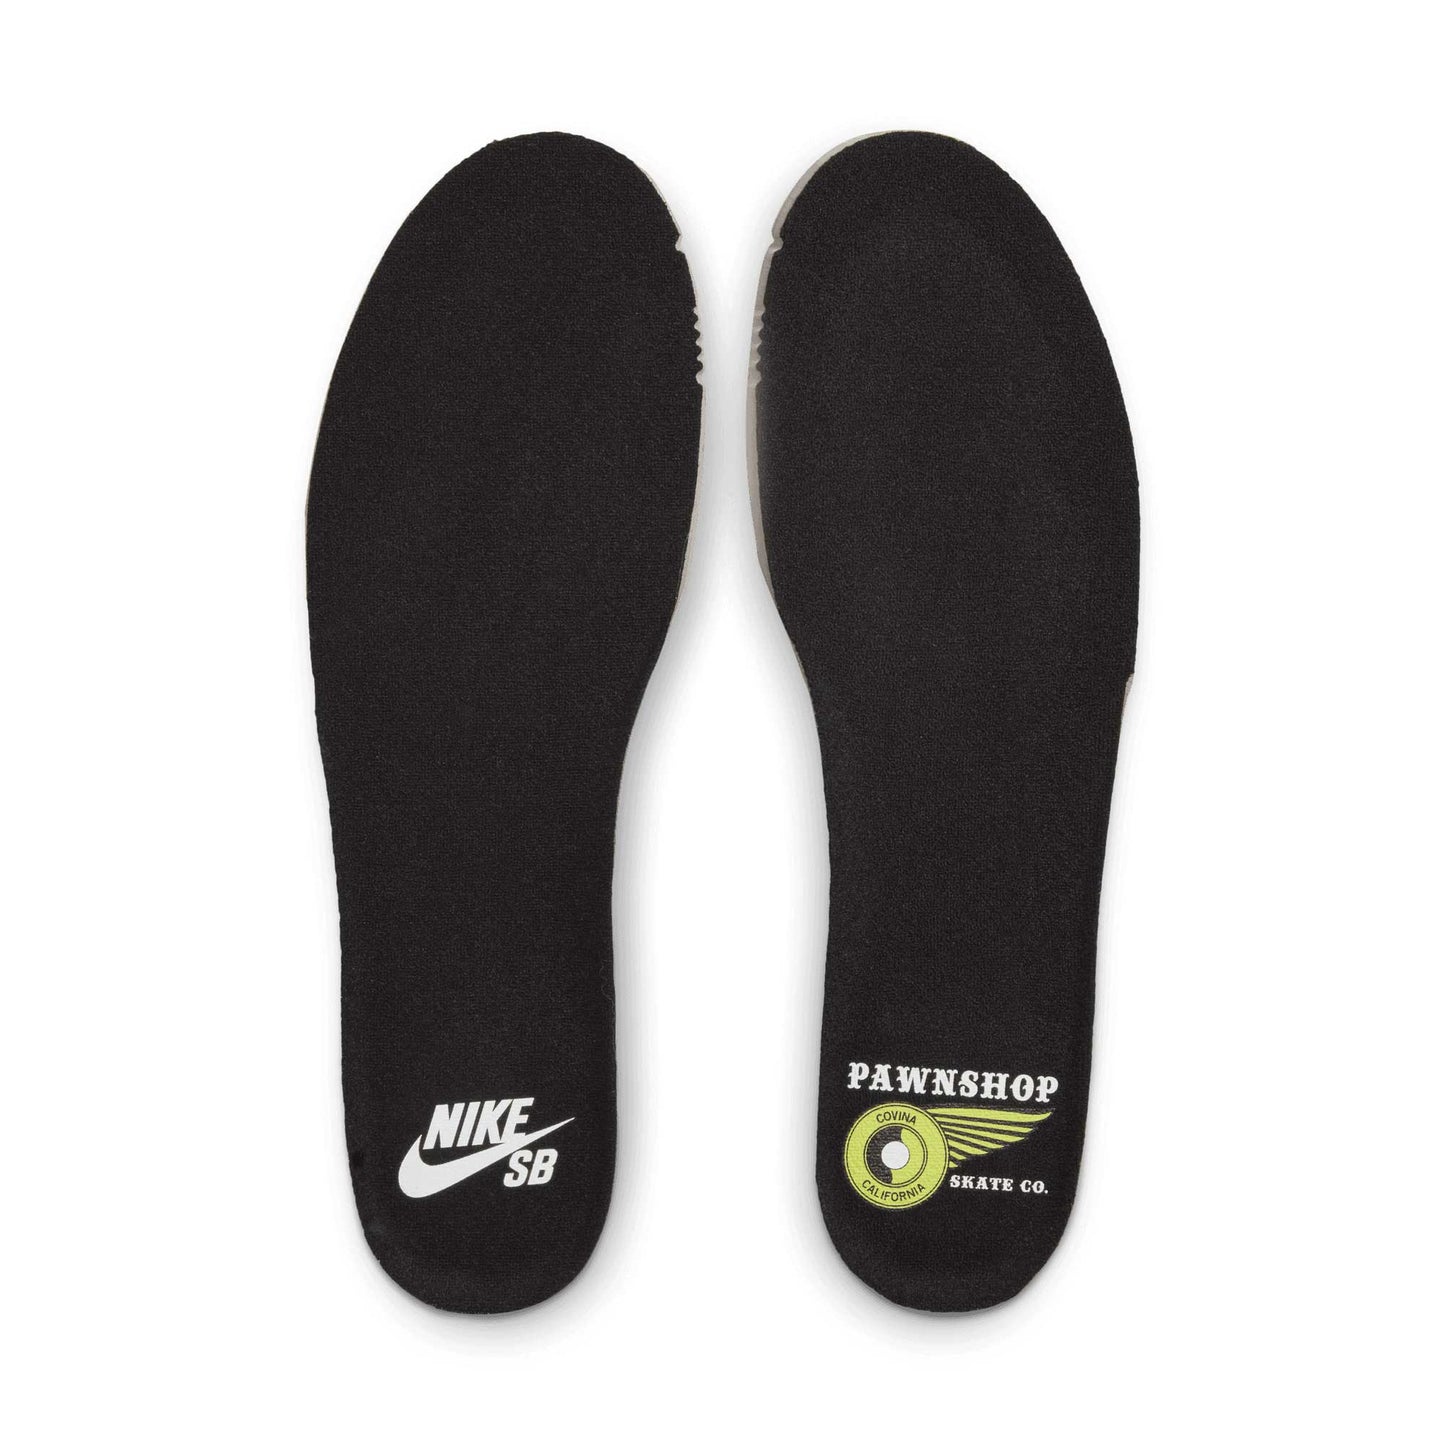 Nike SB Dunk High OG Pawnshop QS, black/black-metallic gold - Tiki Room Skateboards - 6